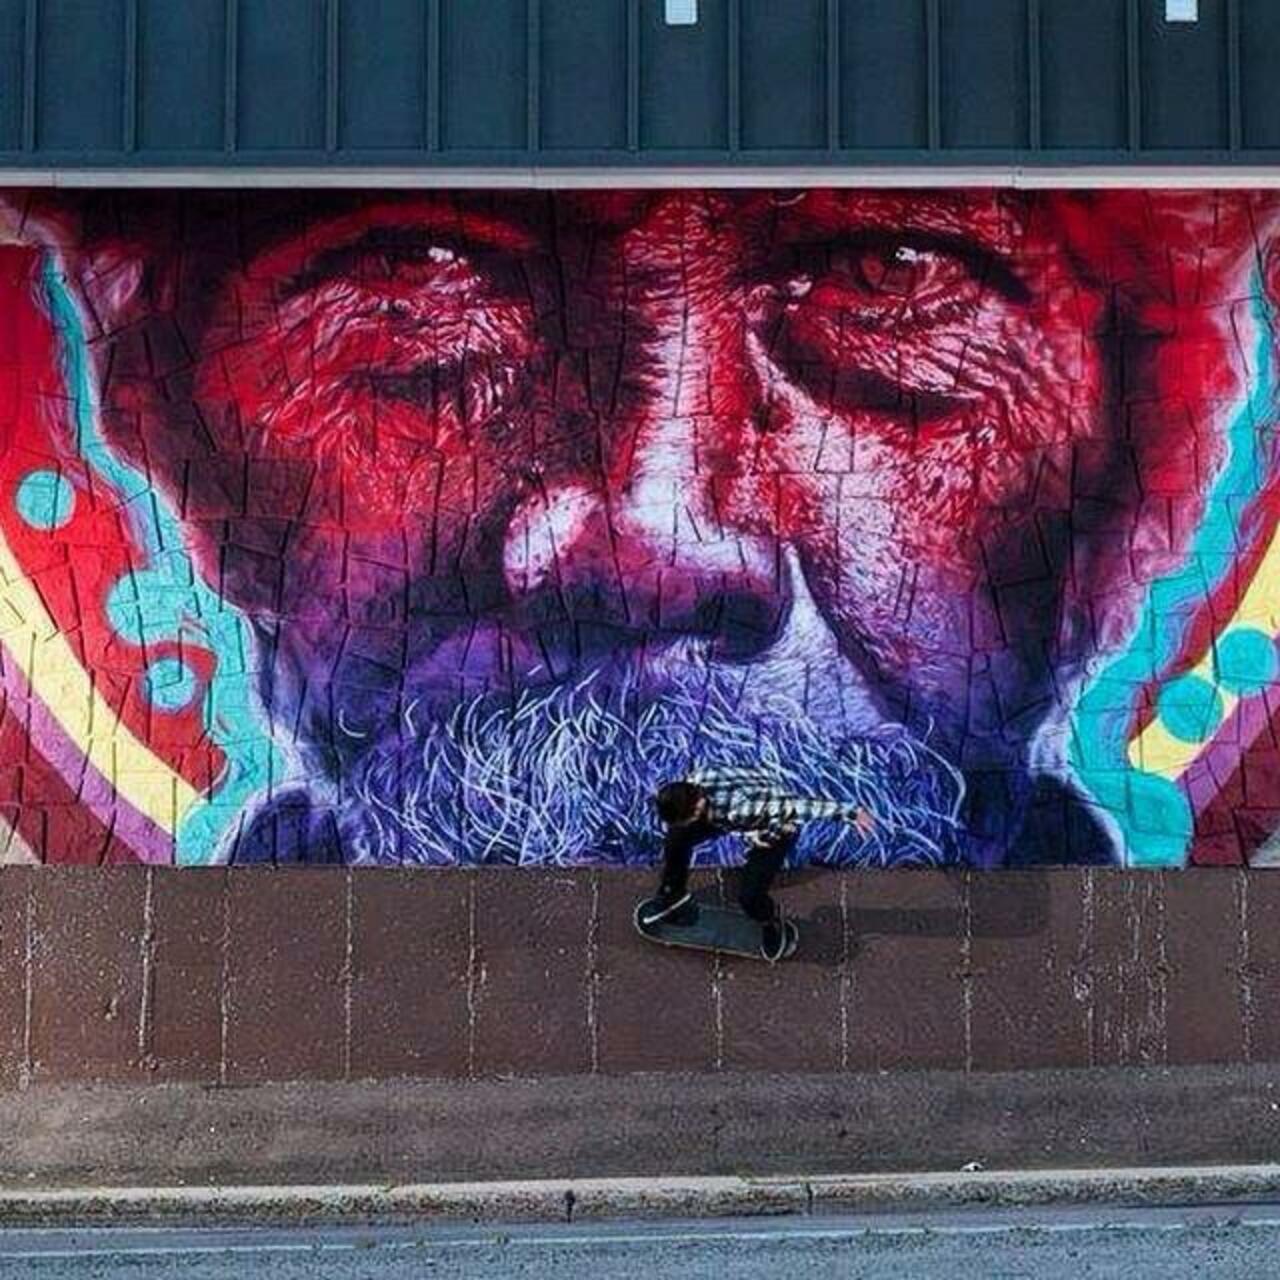 “@GoogleStreetArt: From Montcon, Canada, Kevin Ledo's class Street Art portrait 

#art #mural #graffiti #streetart http://t.co/nBlUPsZcj4”